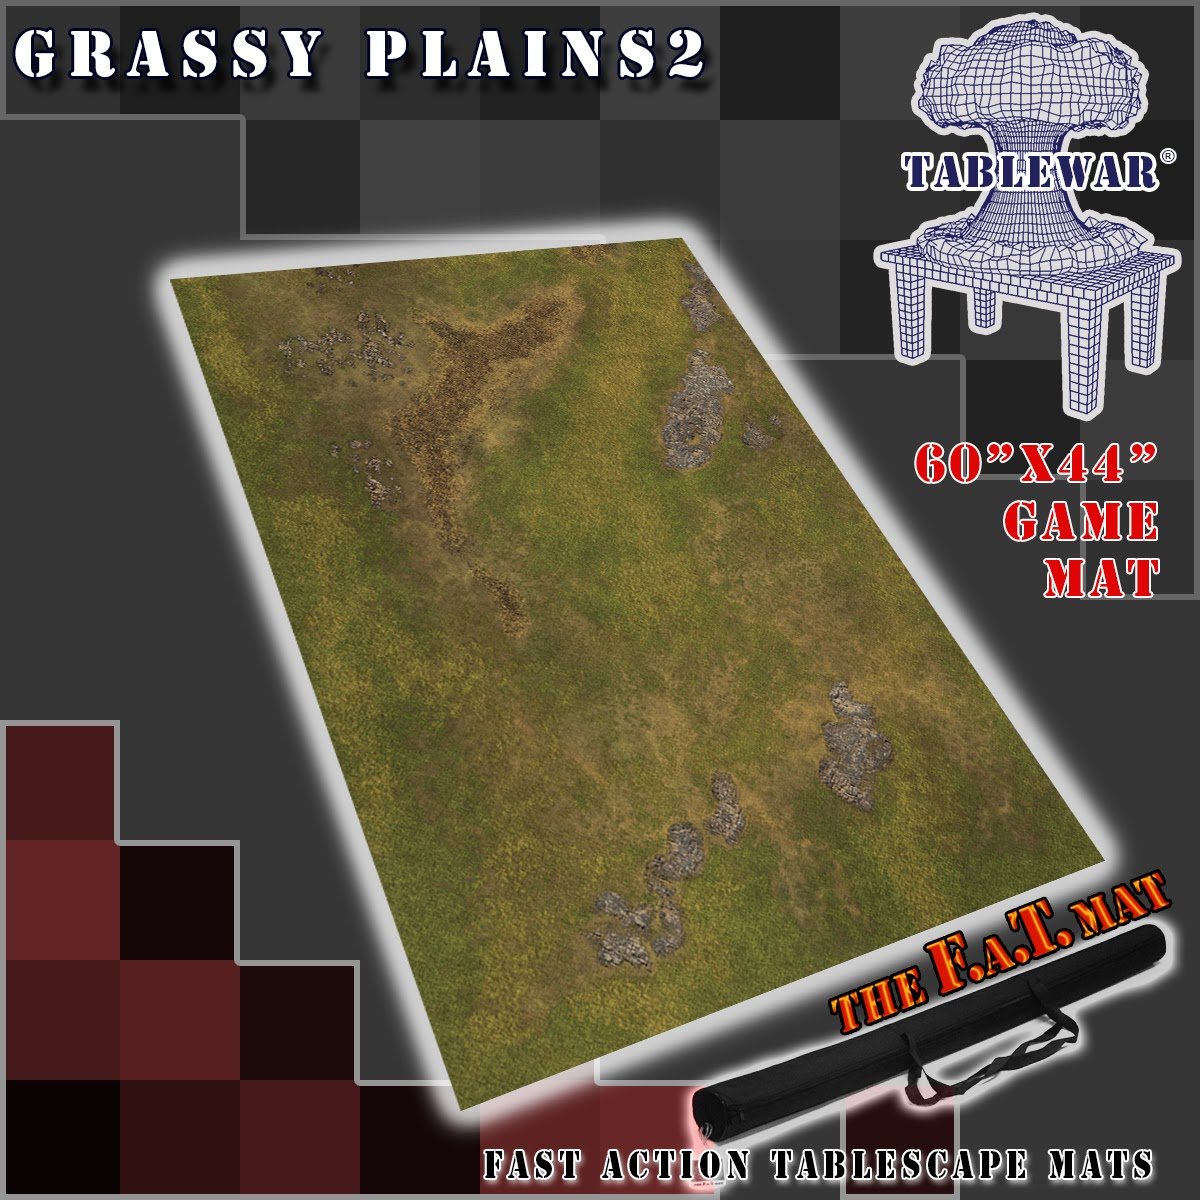 F.A.T. Mats Grassy Plains 2 60'x44' Gaming Mat F.A.T. Mats    | Red Claw Gaming